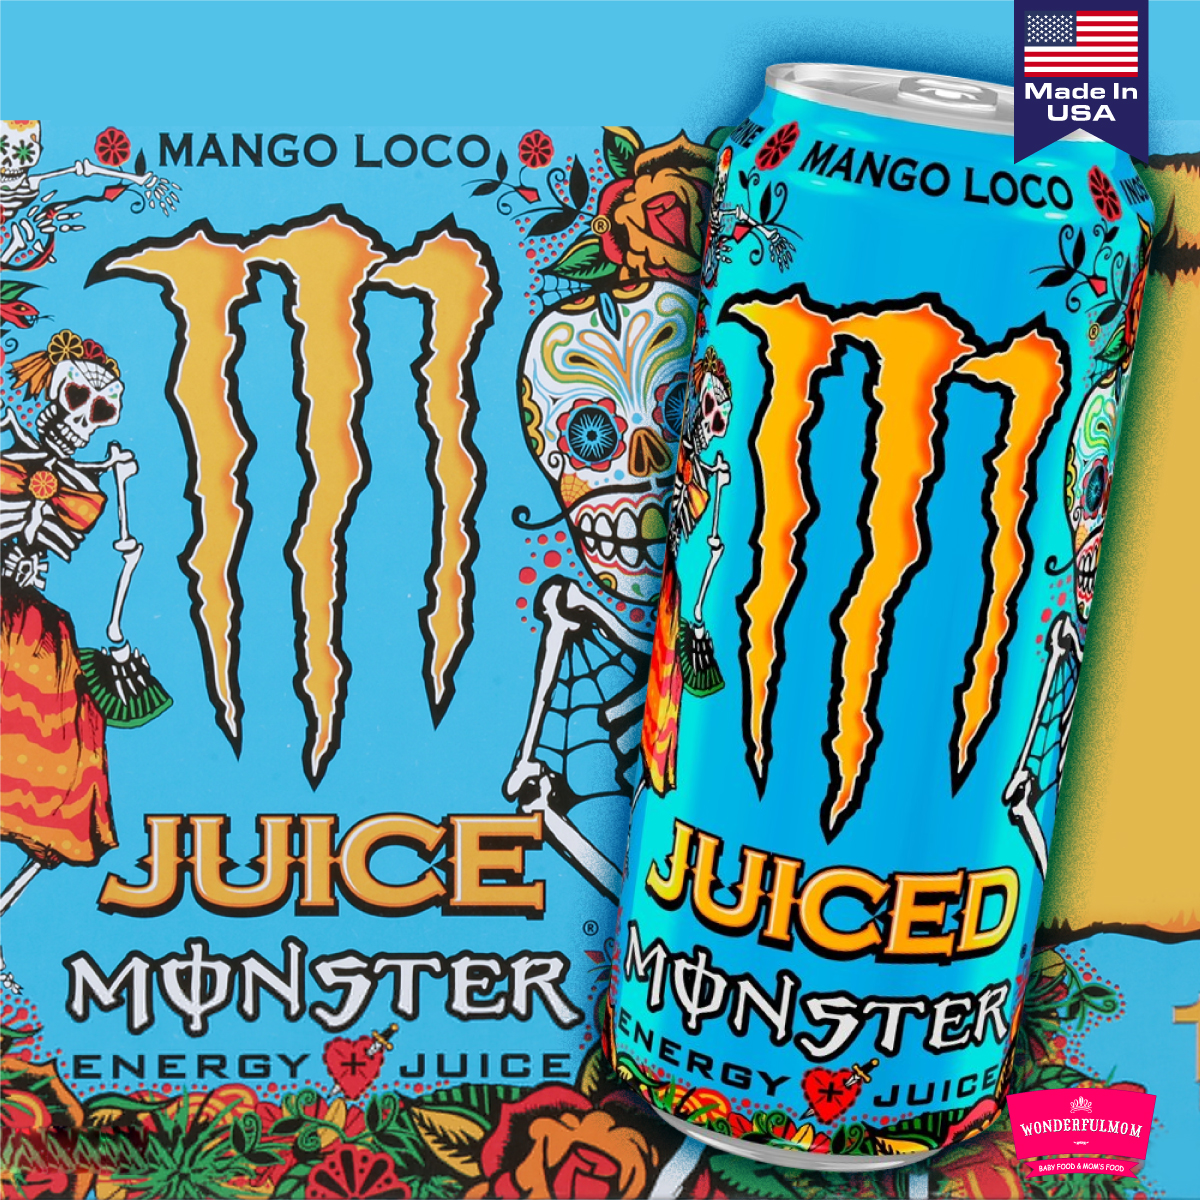 Juice Monster Mango Loco, Energy + Juice